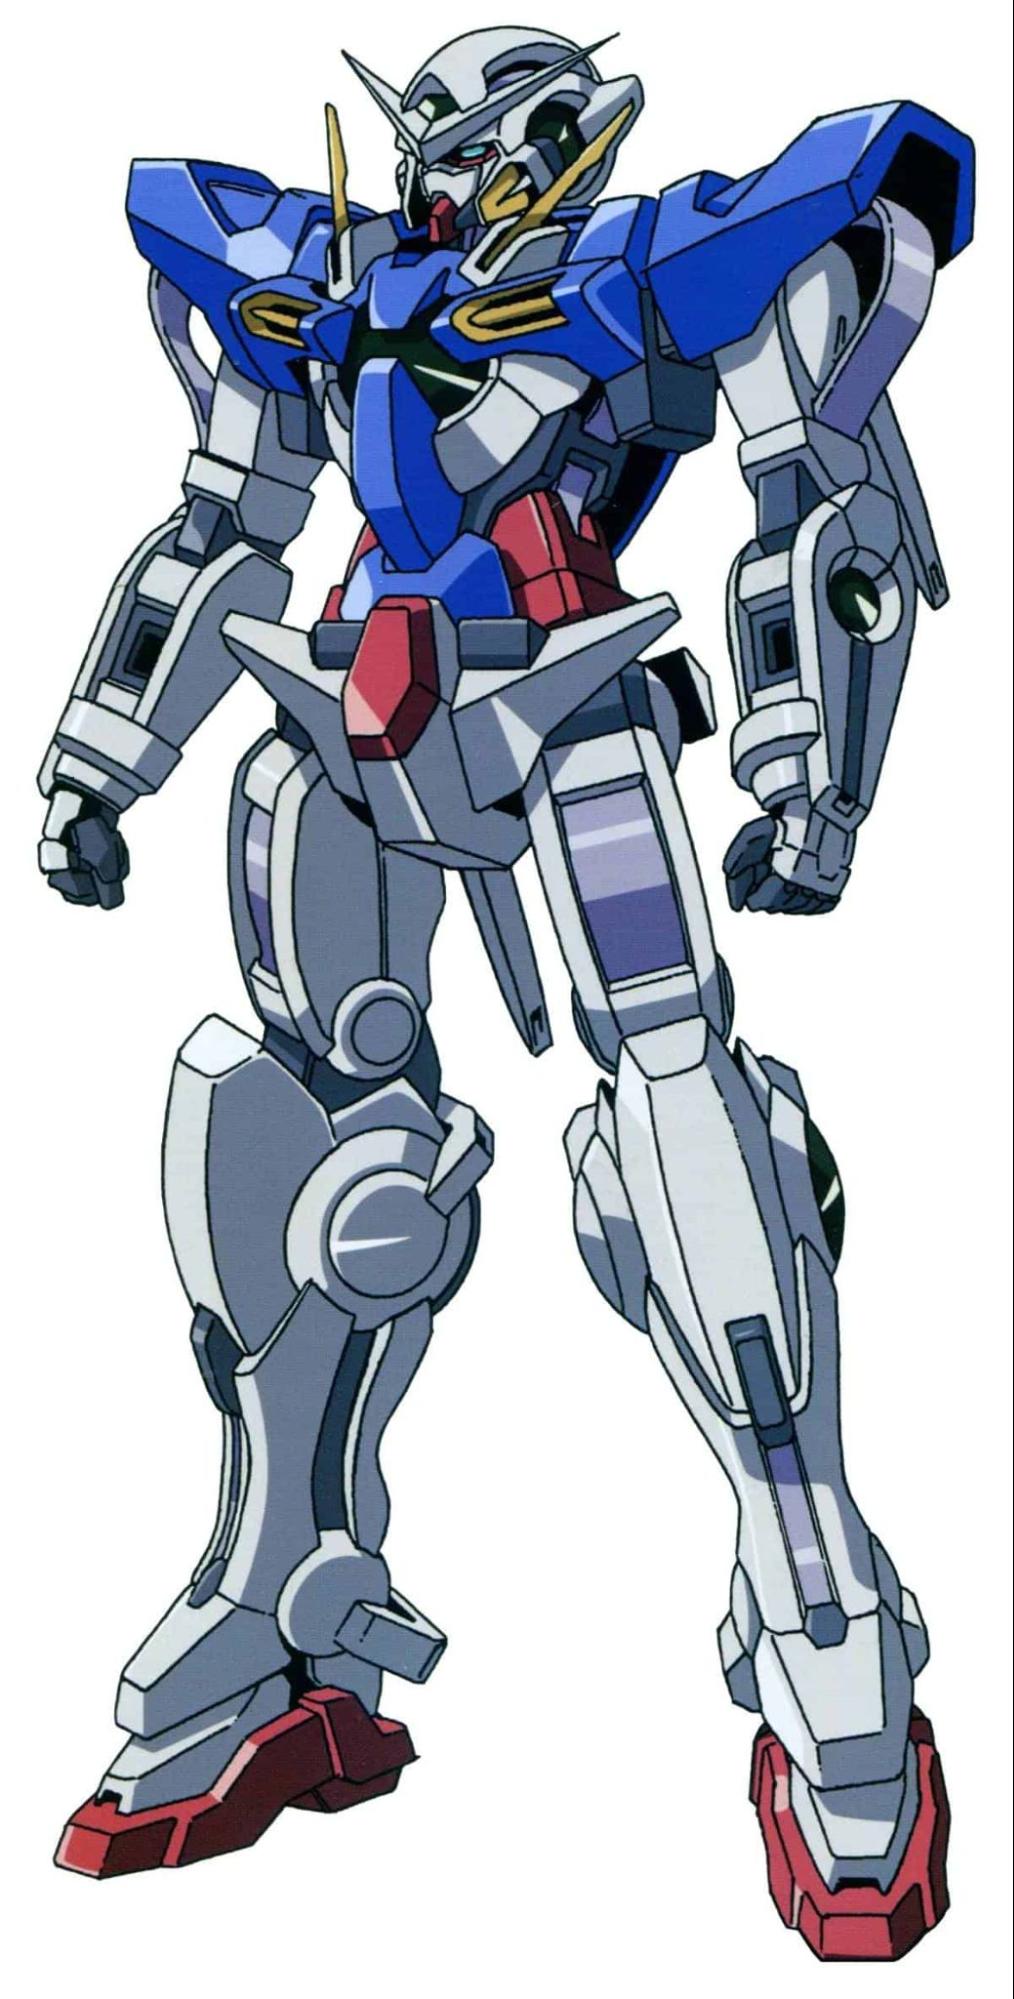 Exia Gundam - Virtue in Precision